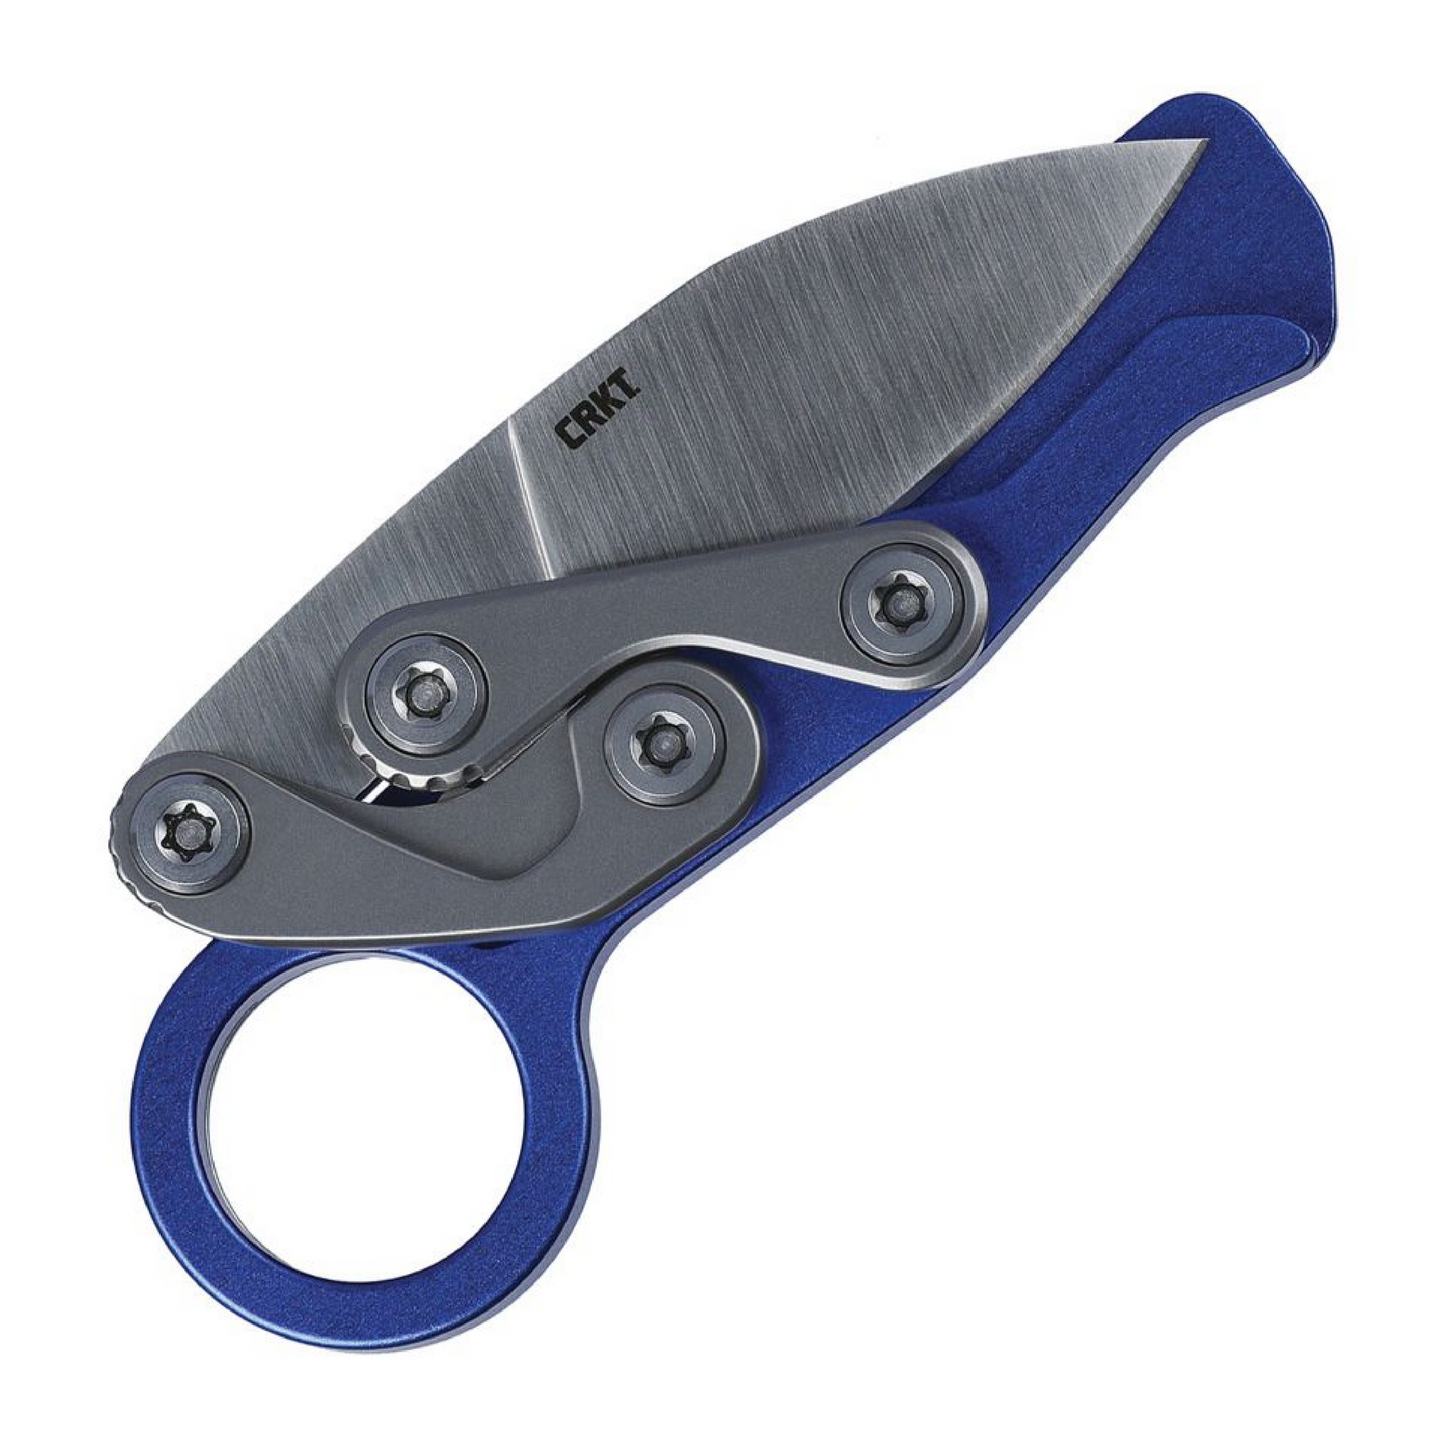 CRKT Provoke EDC 2.56" D2 Satin Blue Folding Knife - Joe Caswell Design 4050